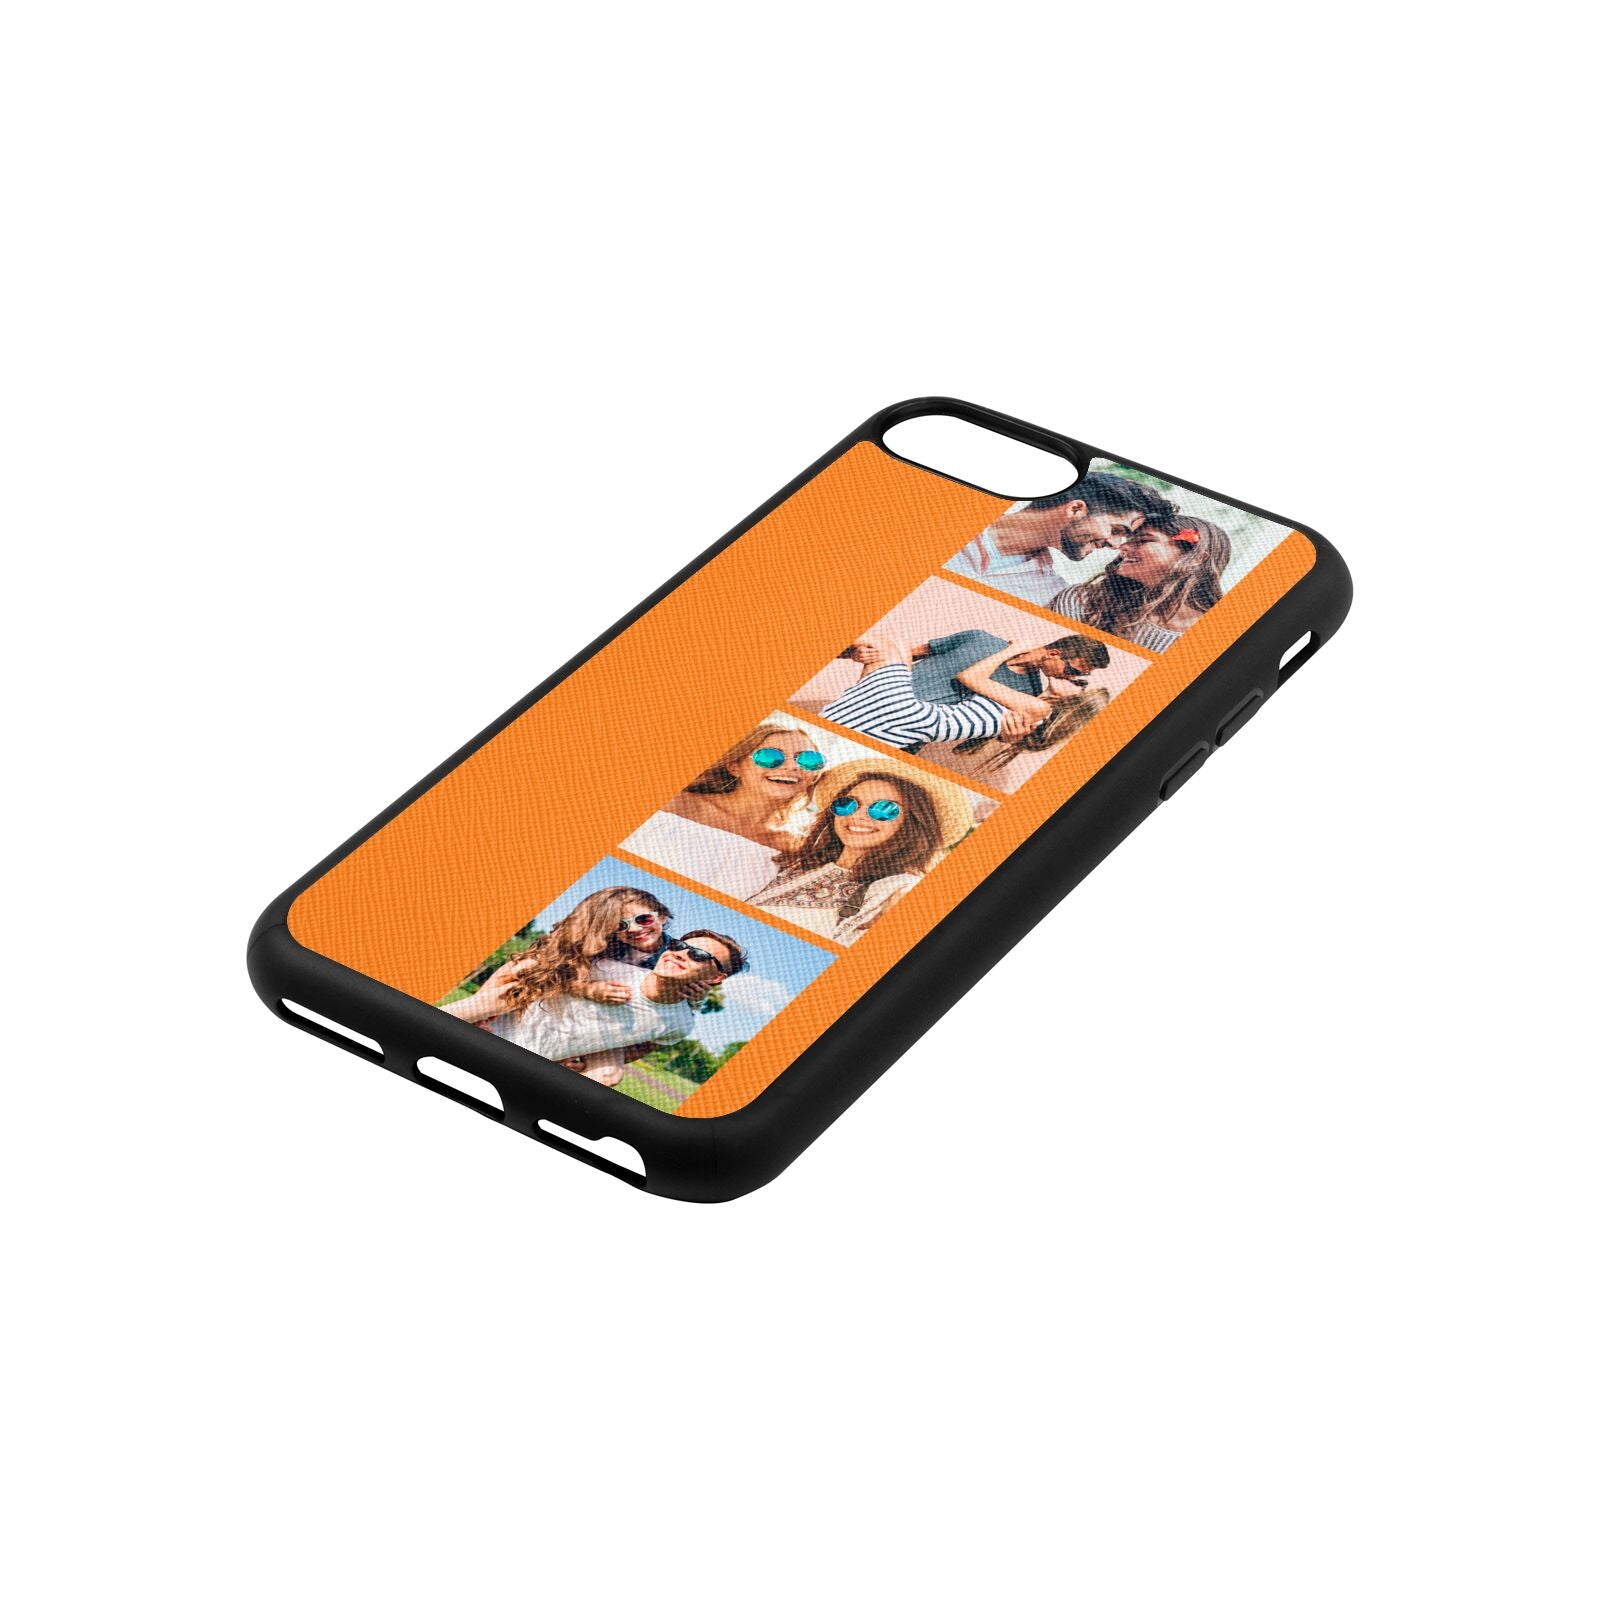 Photo Strip Montage Upload Saffron Saffiano Leather iPhone 8 Case Side Angle